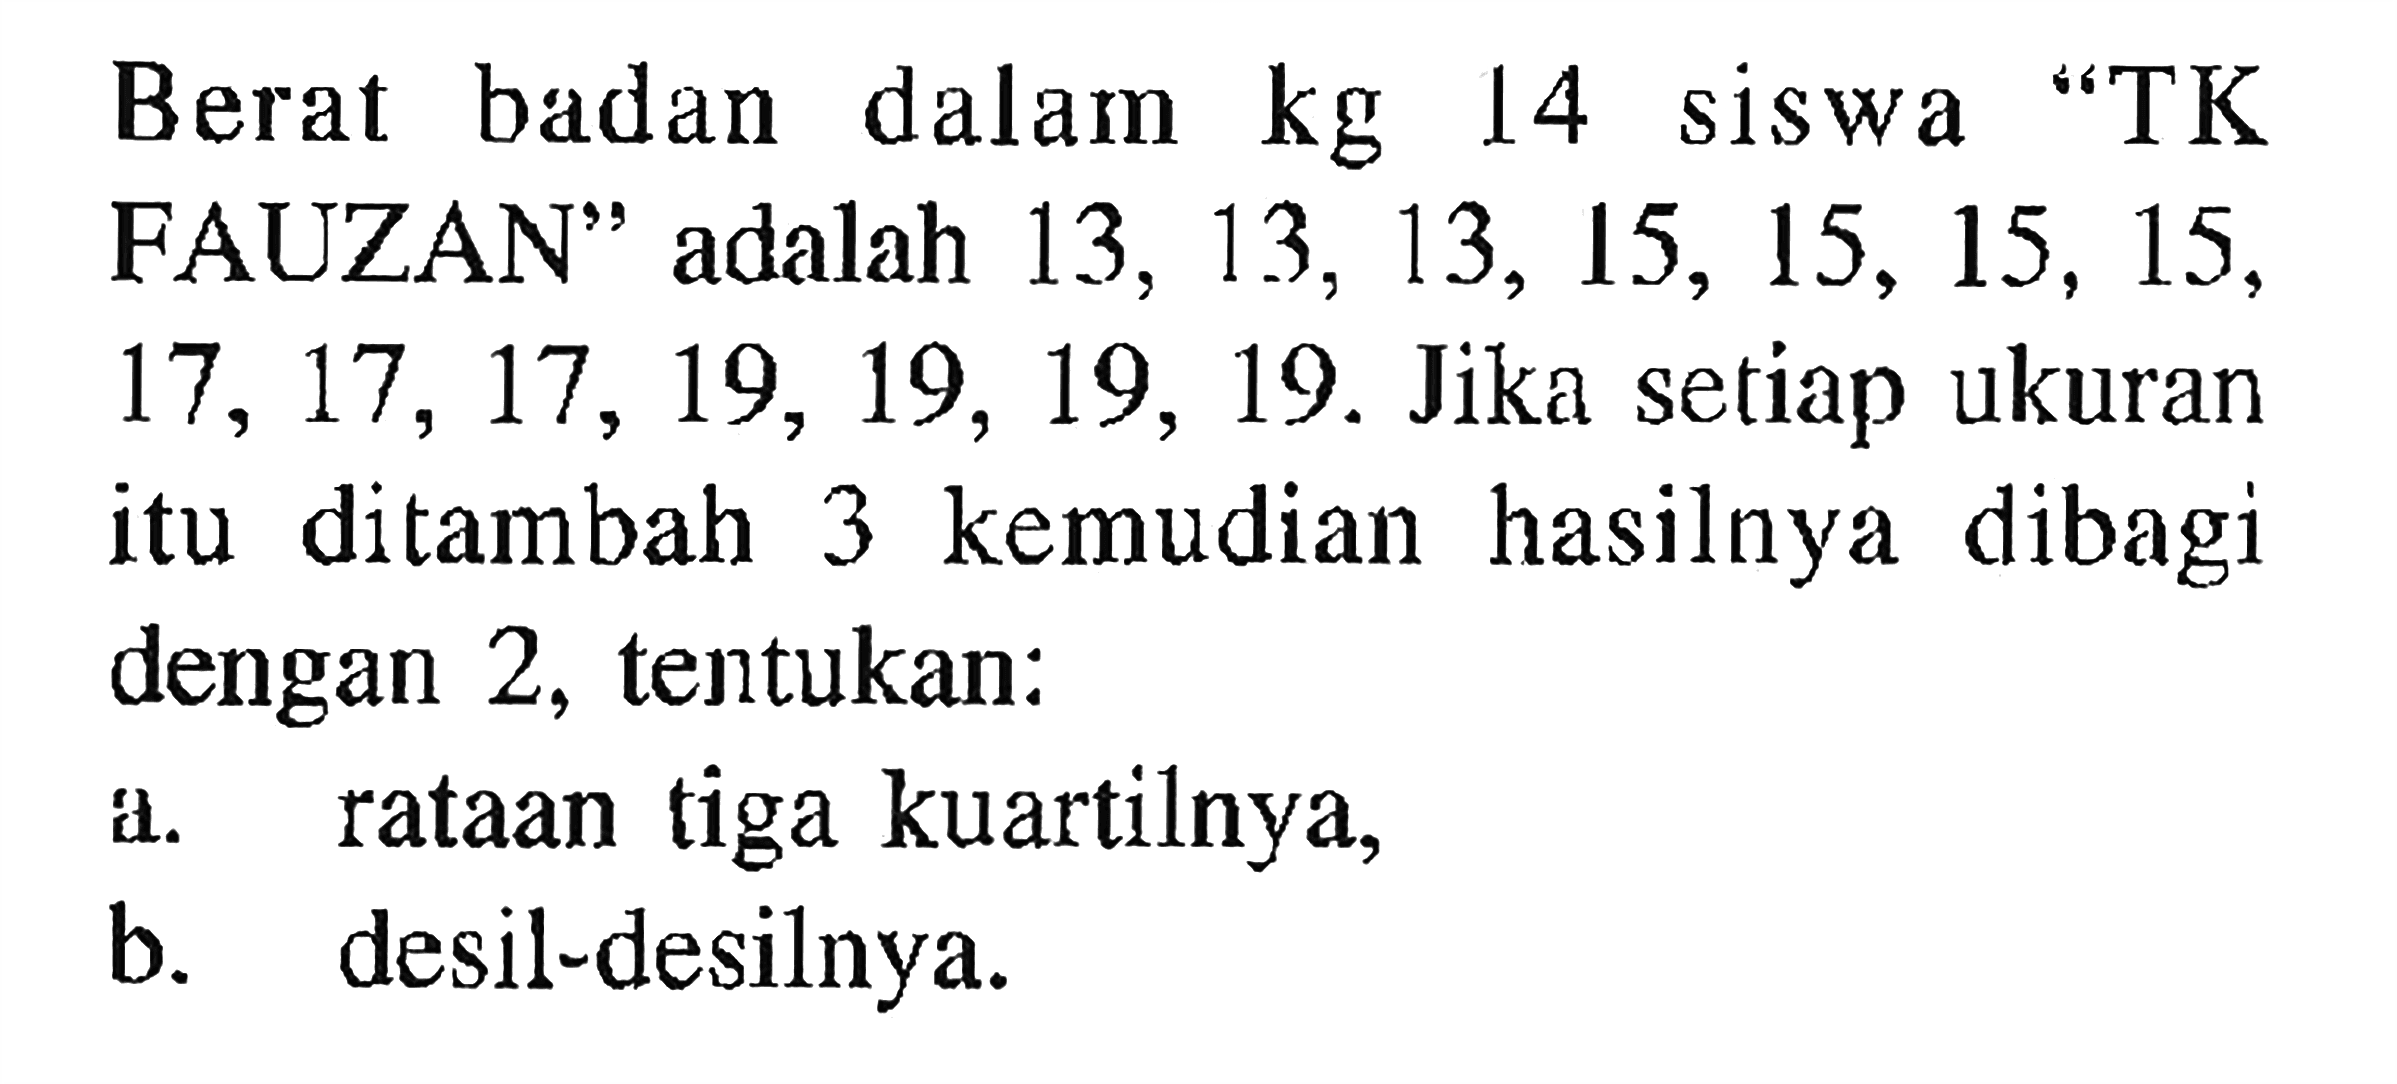 Berat badan kg dalam 14 siswa "TK FAUZAN" adalah 13,13,13,15,15,15,15,17,17,17,19,19,19,19. Jika setiap ukuran kemudian hasilnya dibagi itu ditambah 3 dengan 2, tentukan: a. rataan tiga kuartilnya, b. desil-desilnya.